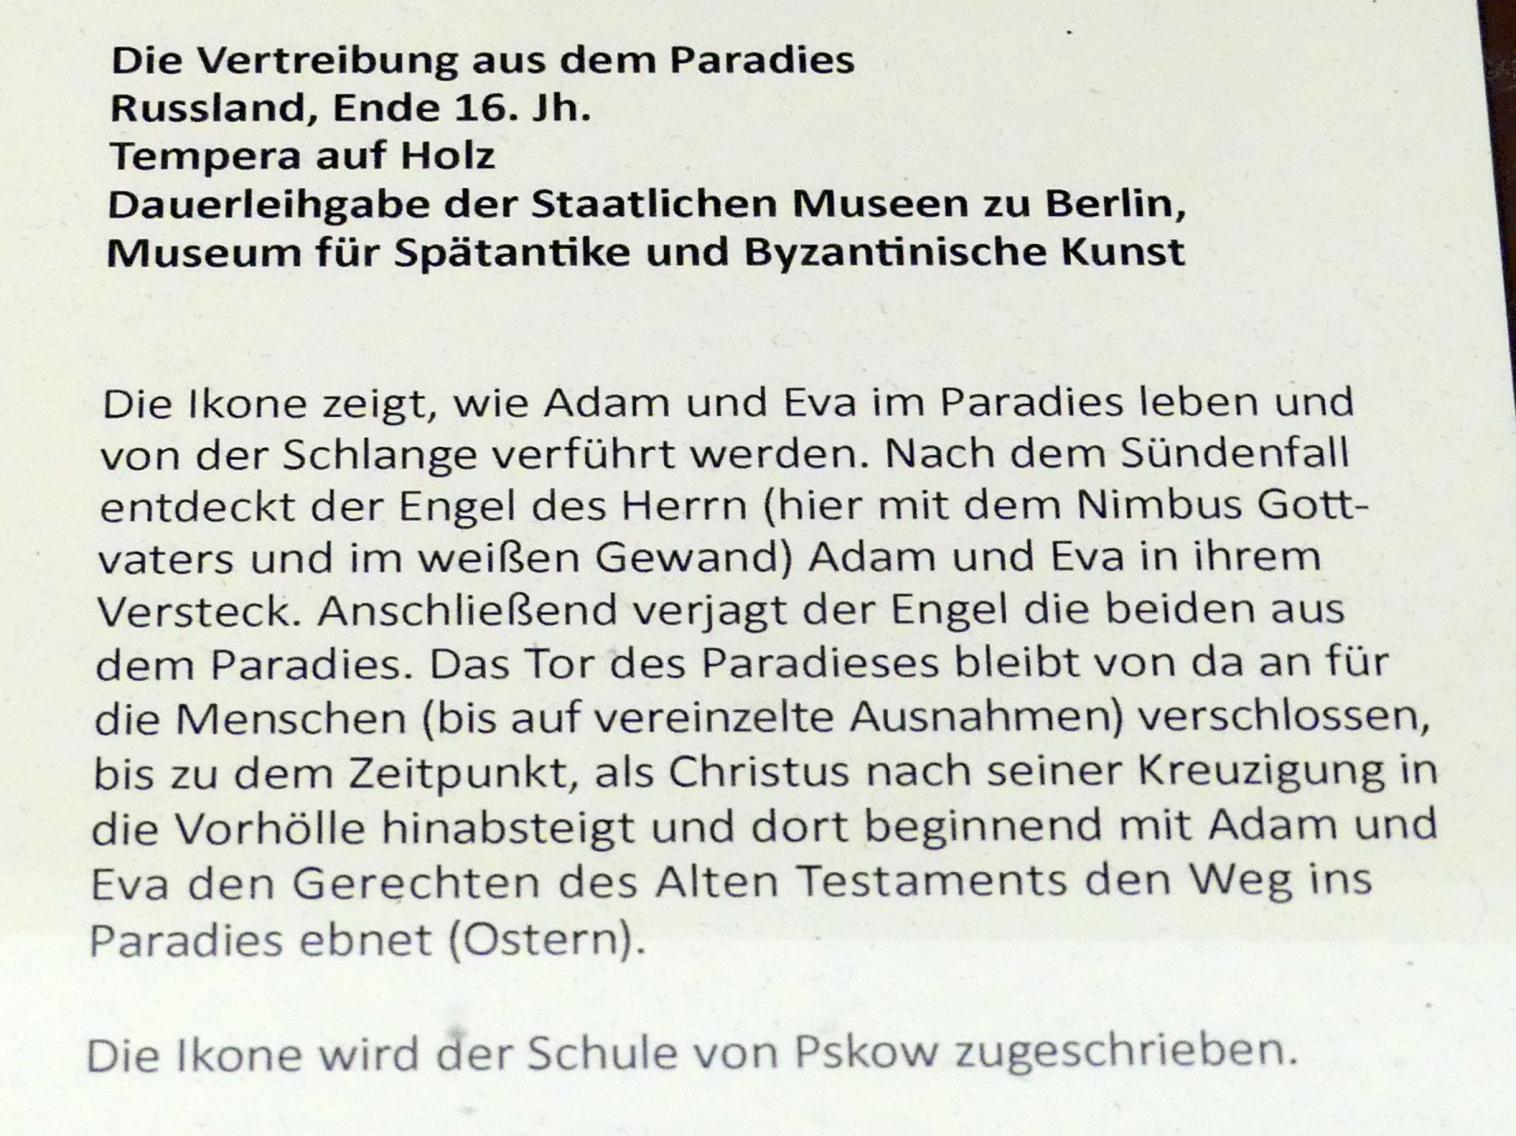 Die Vertreibung aus dem Paradies, Frankfurt am Main, Ikonen-Museum, Erdgeschoss, Ende 16. Jhd., Bild 2/2